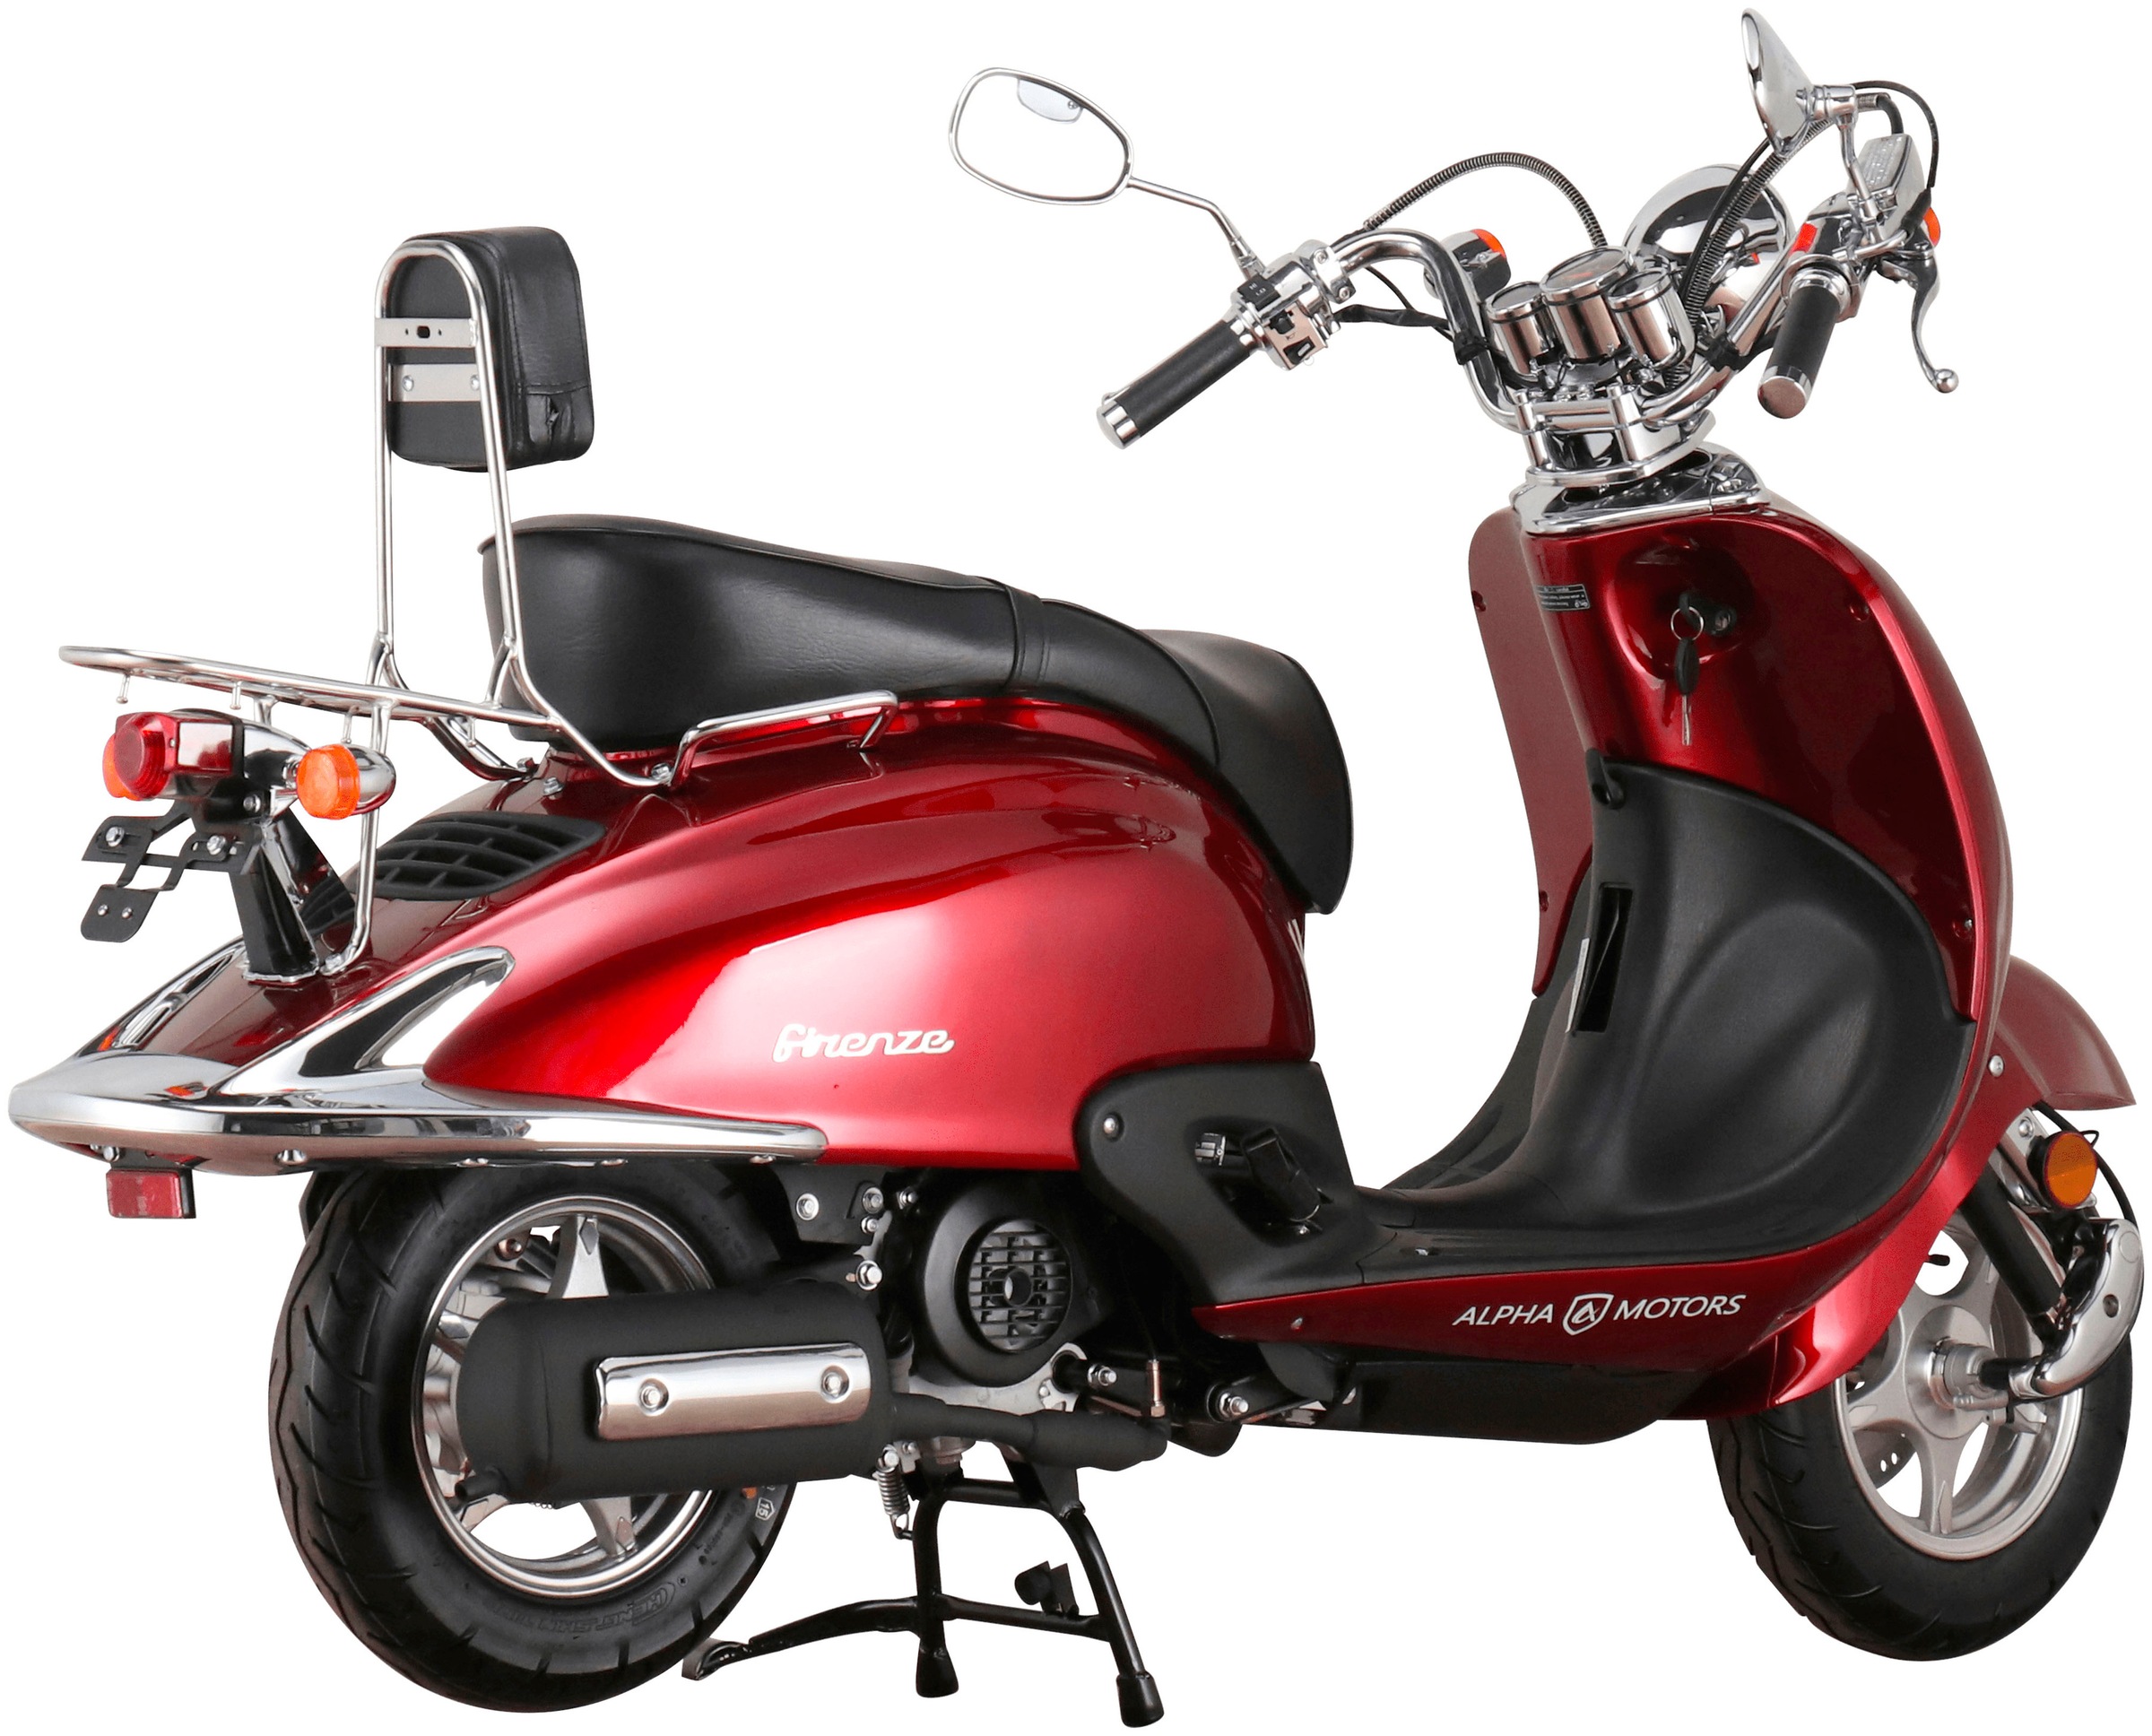 Alpha Motors Motorroller PS km/h, Firenze«, 8,6 85 »Retro %Sale jetzt 5, cm³, Euro 125 im